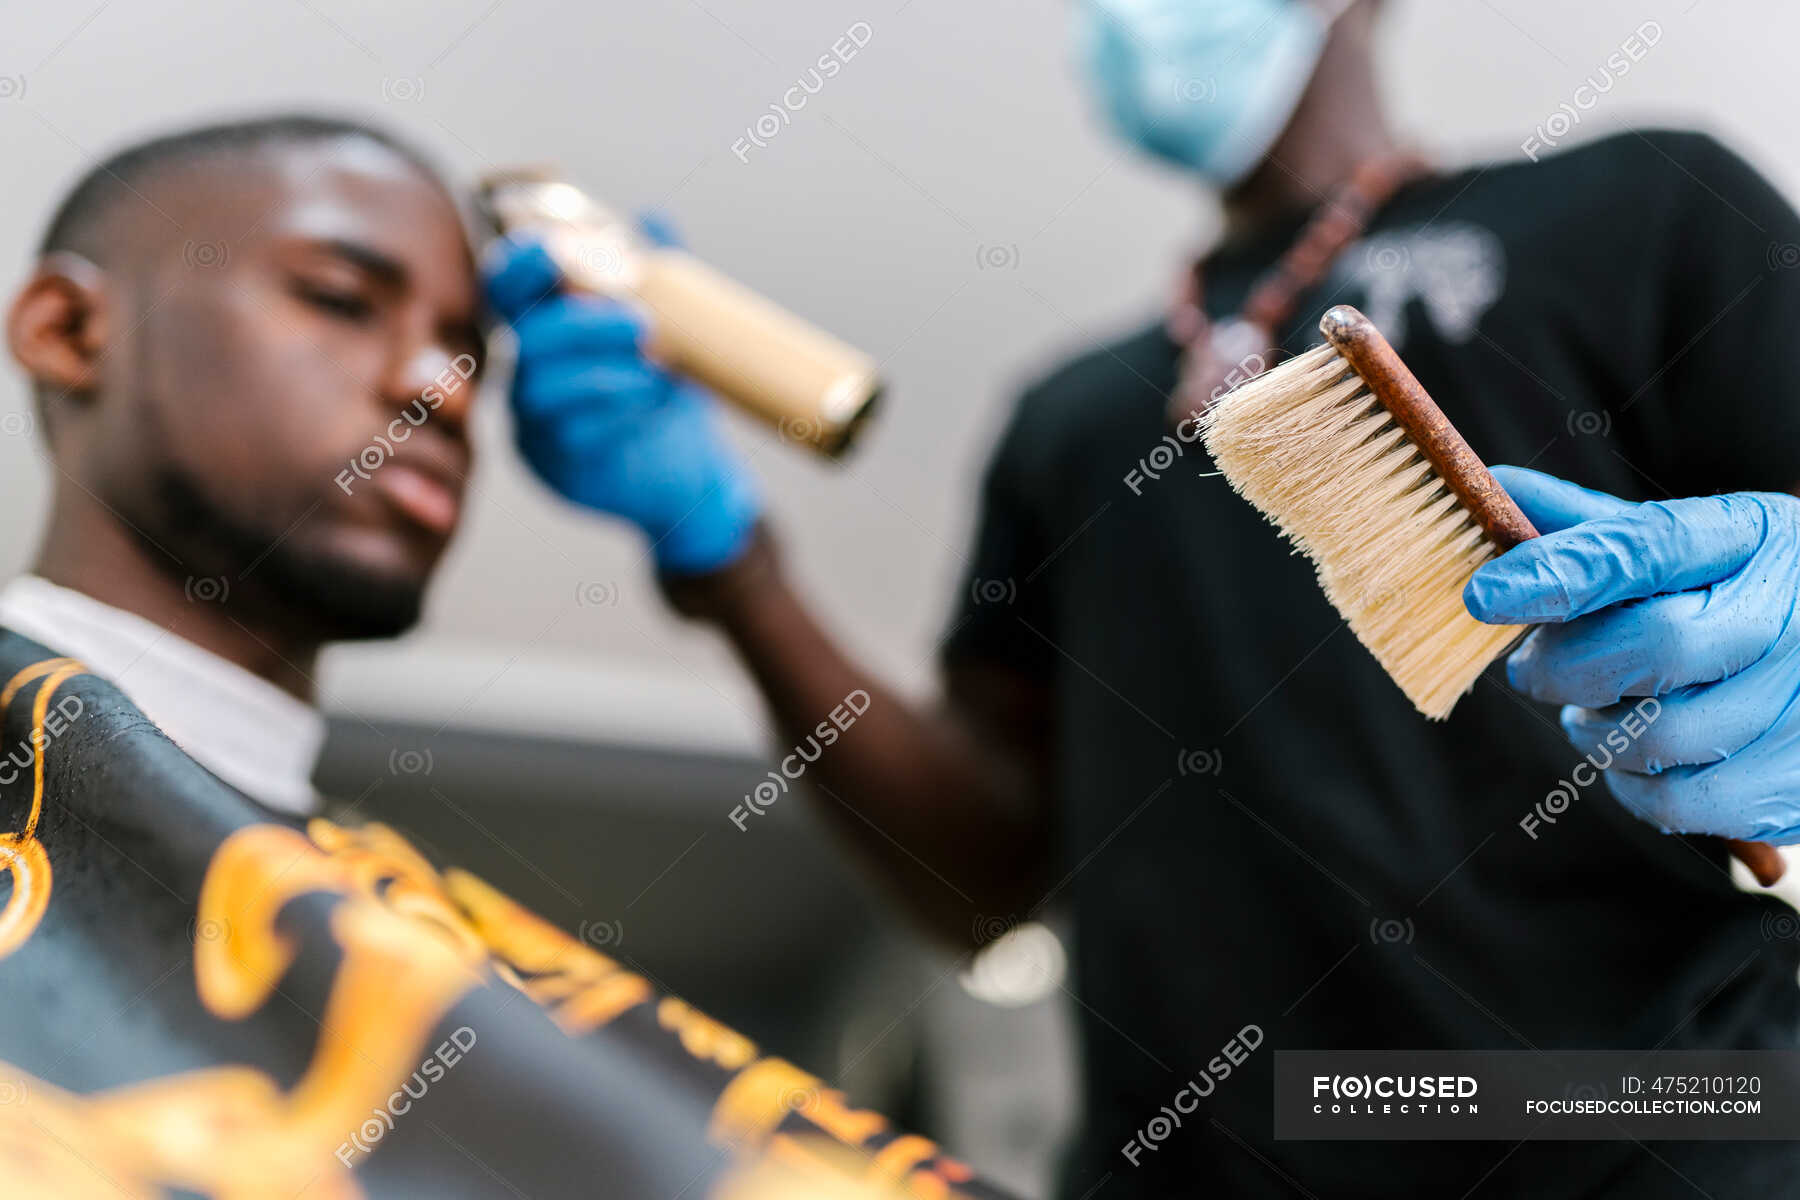 Focused 475210120 Stock Photo Barber Wearing Gloves Holding Brush 